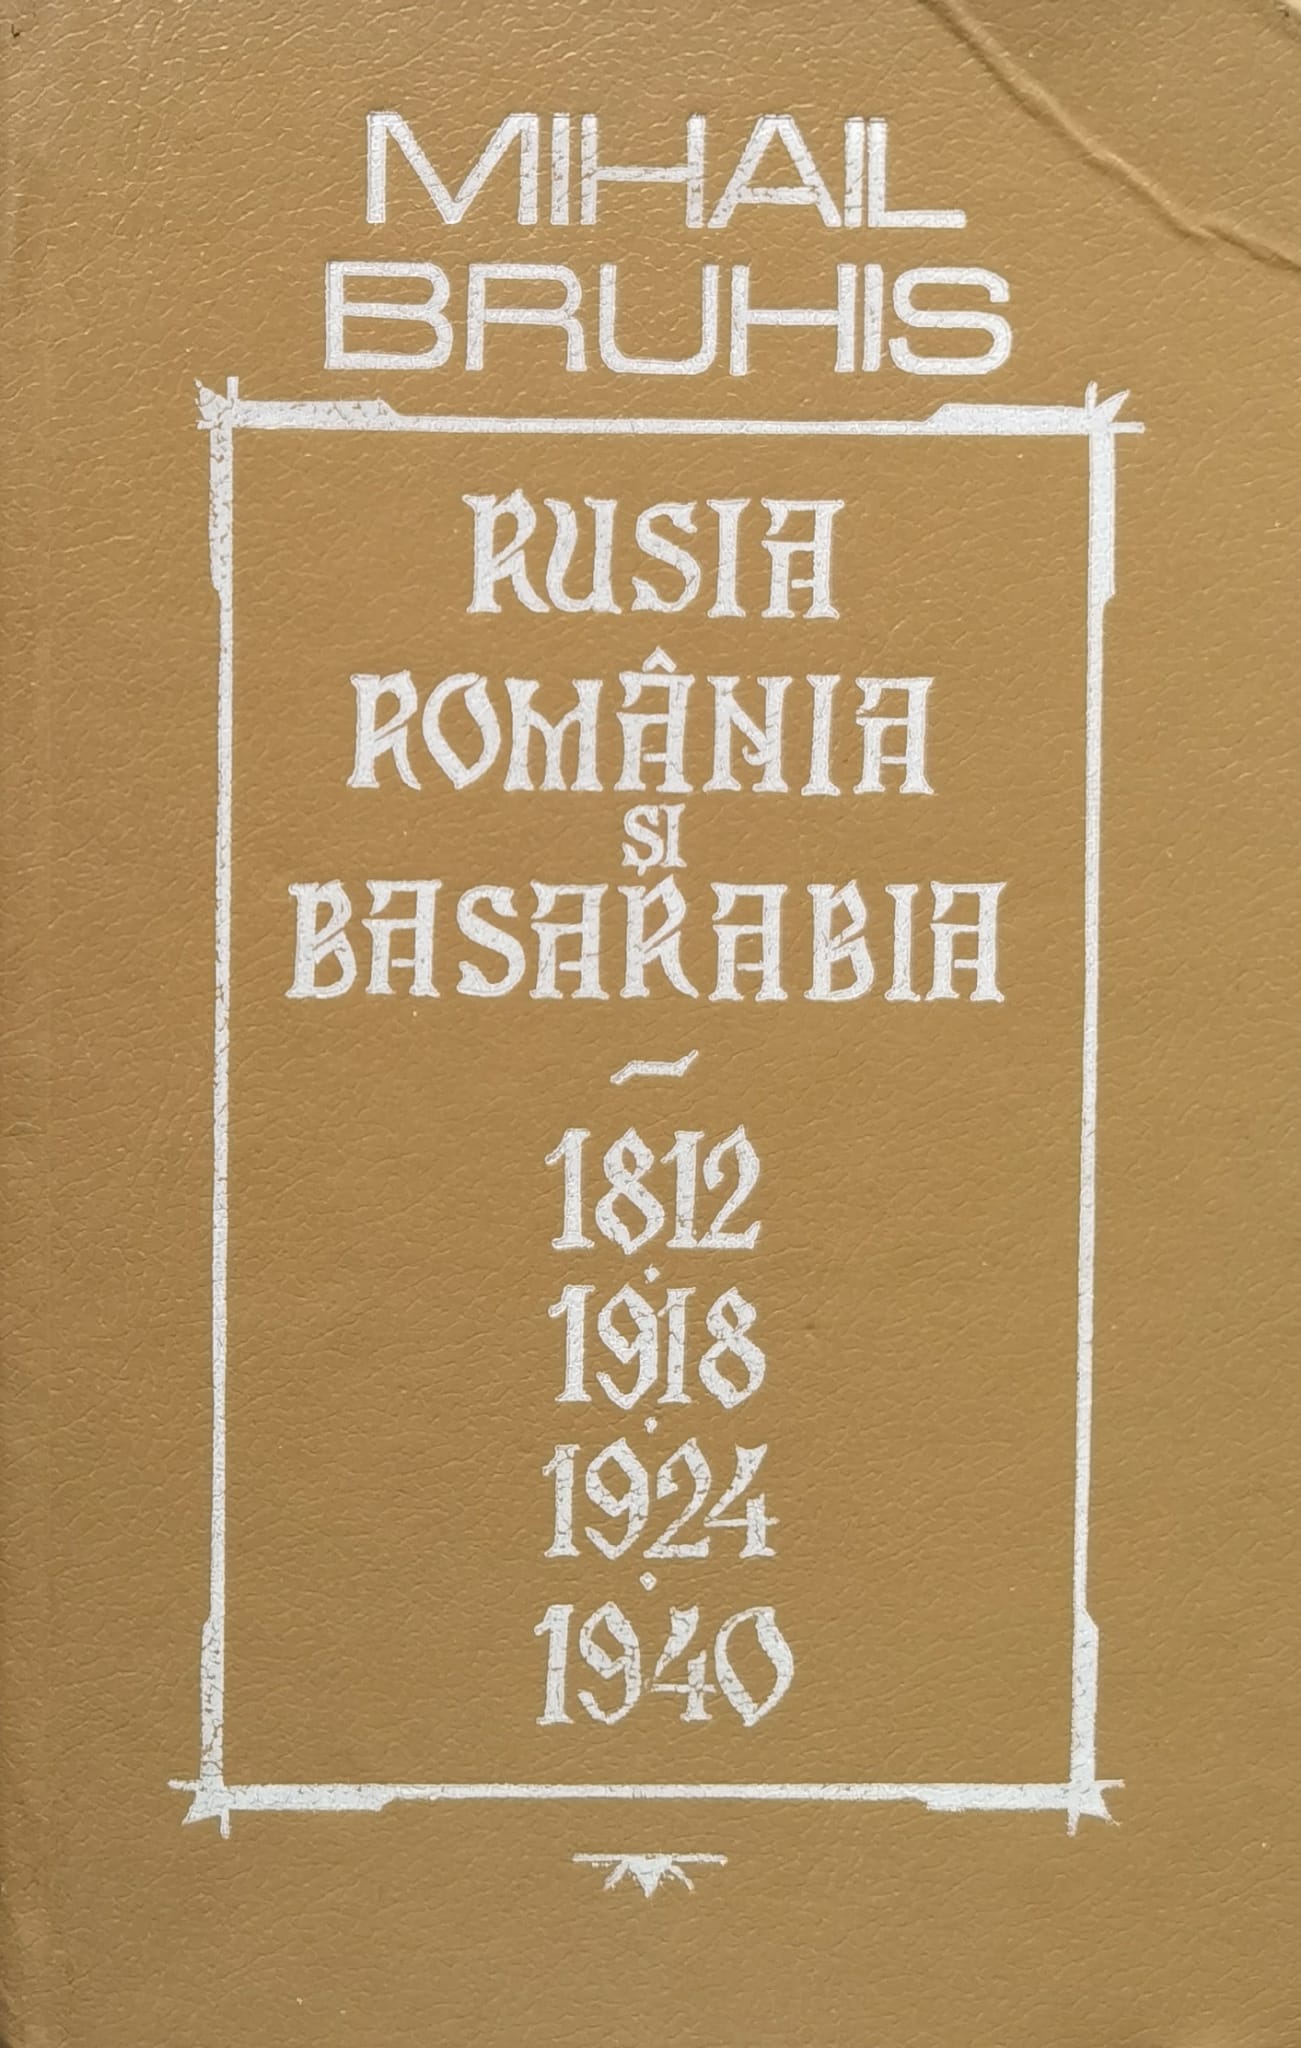 rusia romania si basarabia 1812-1918-1924-1940                                                       mihail bruhis                                                                                       